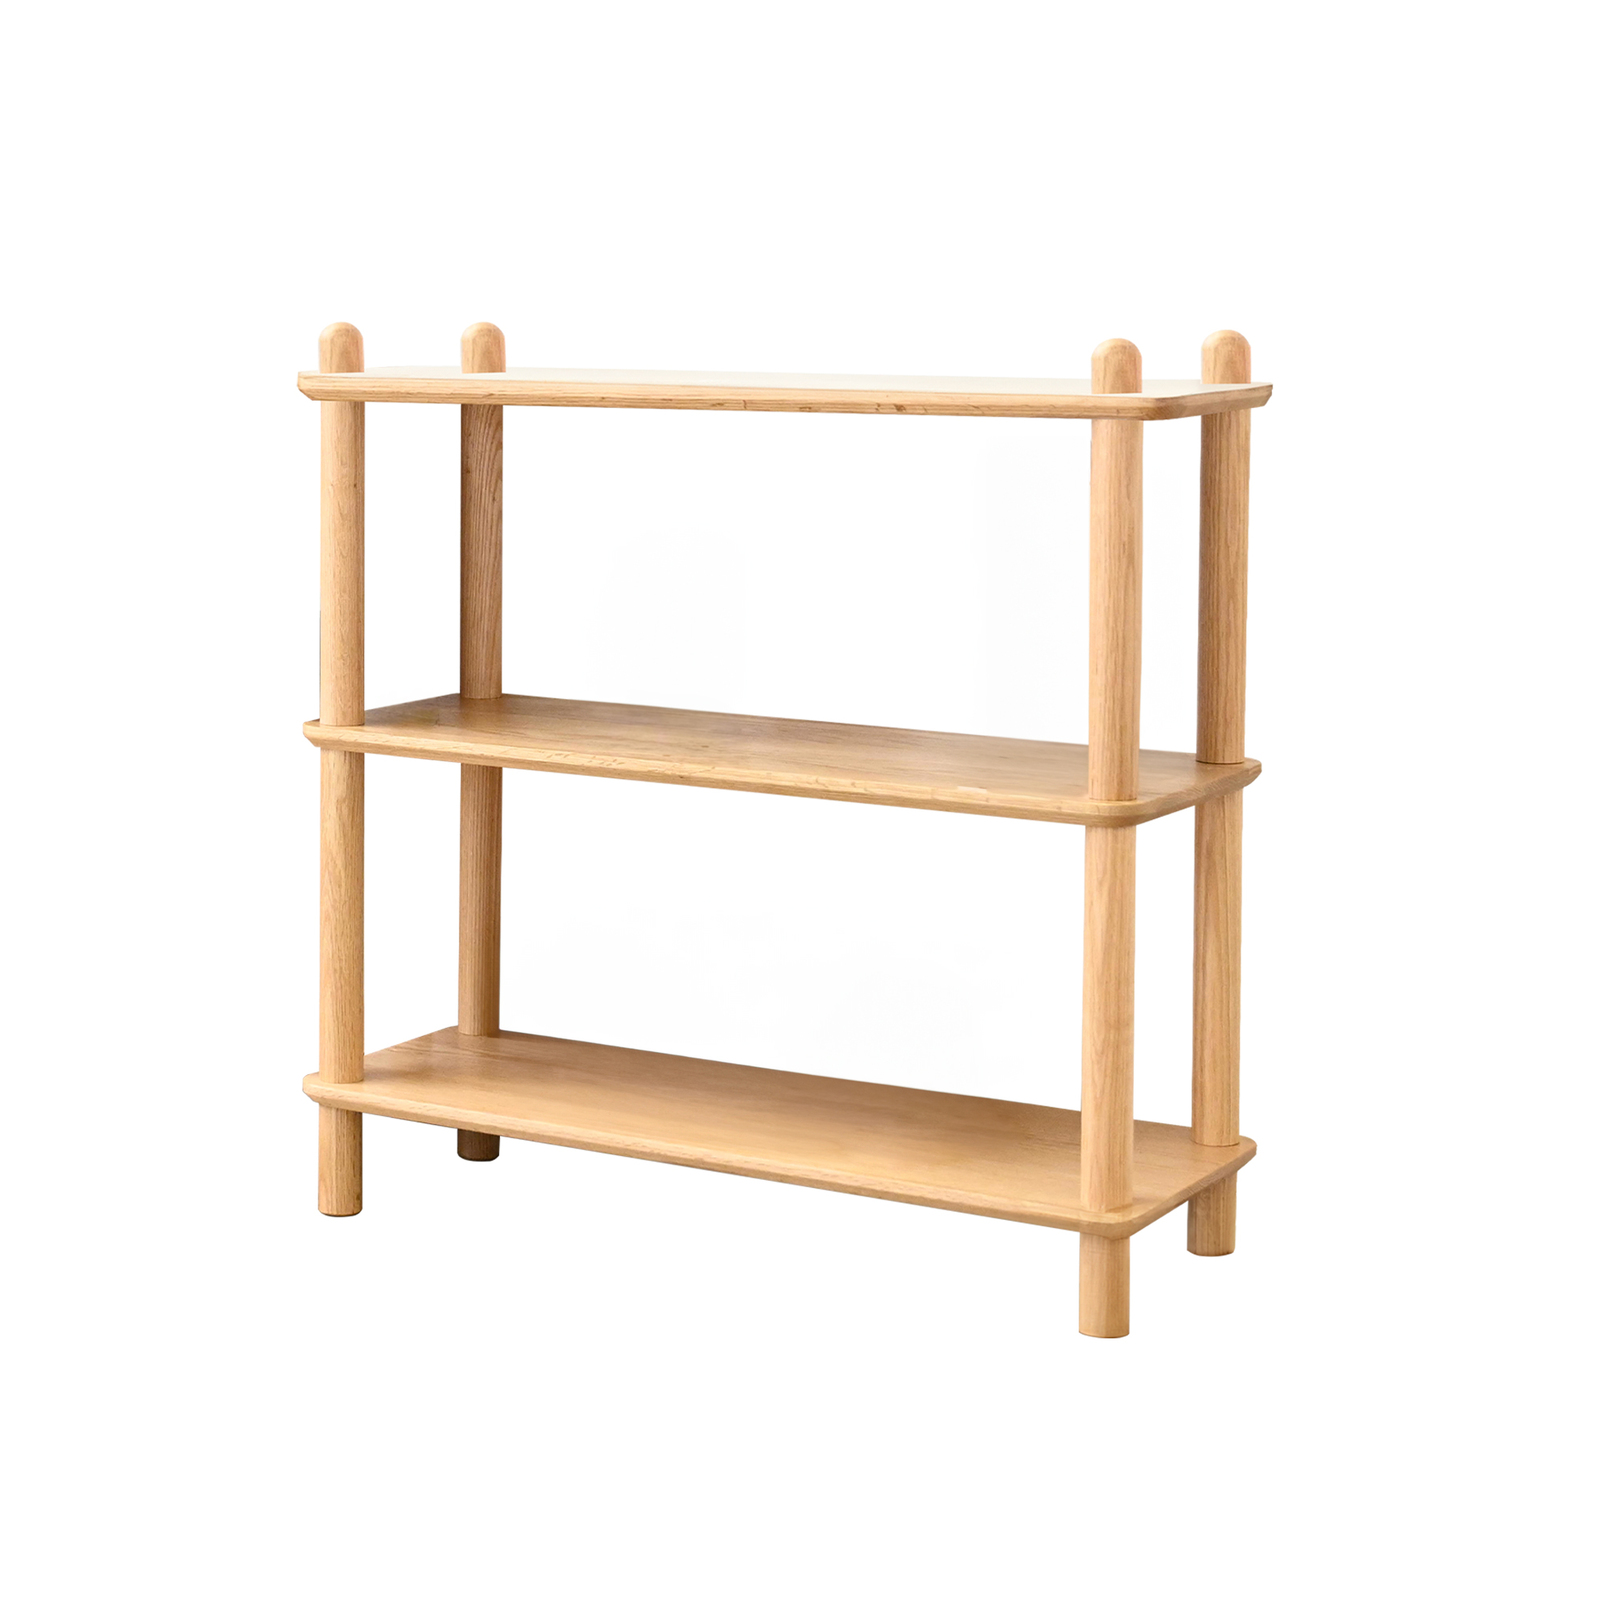 2 Tier Solid Oak Wood Display Shelf Bookshelf Storage Rack Stand